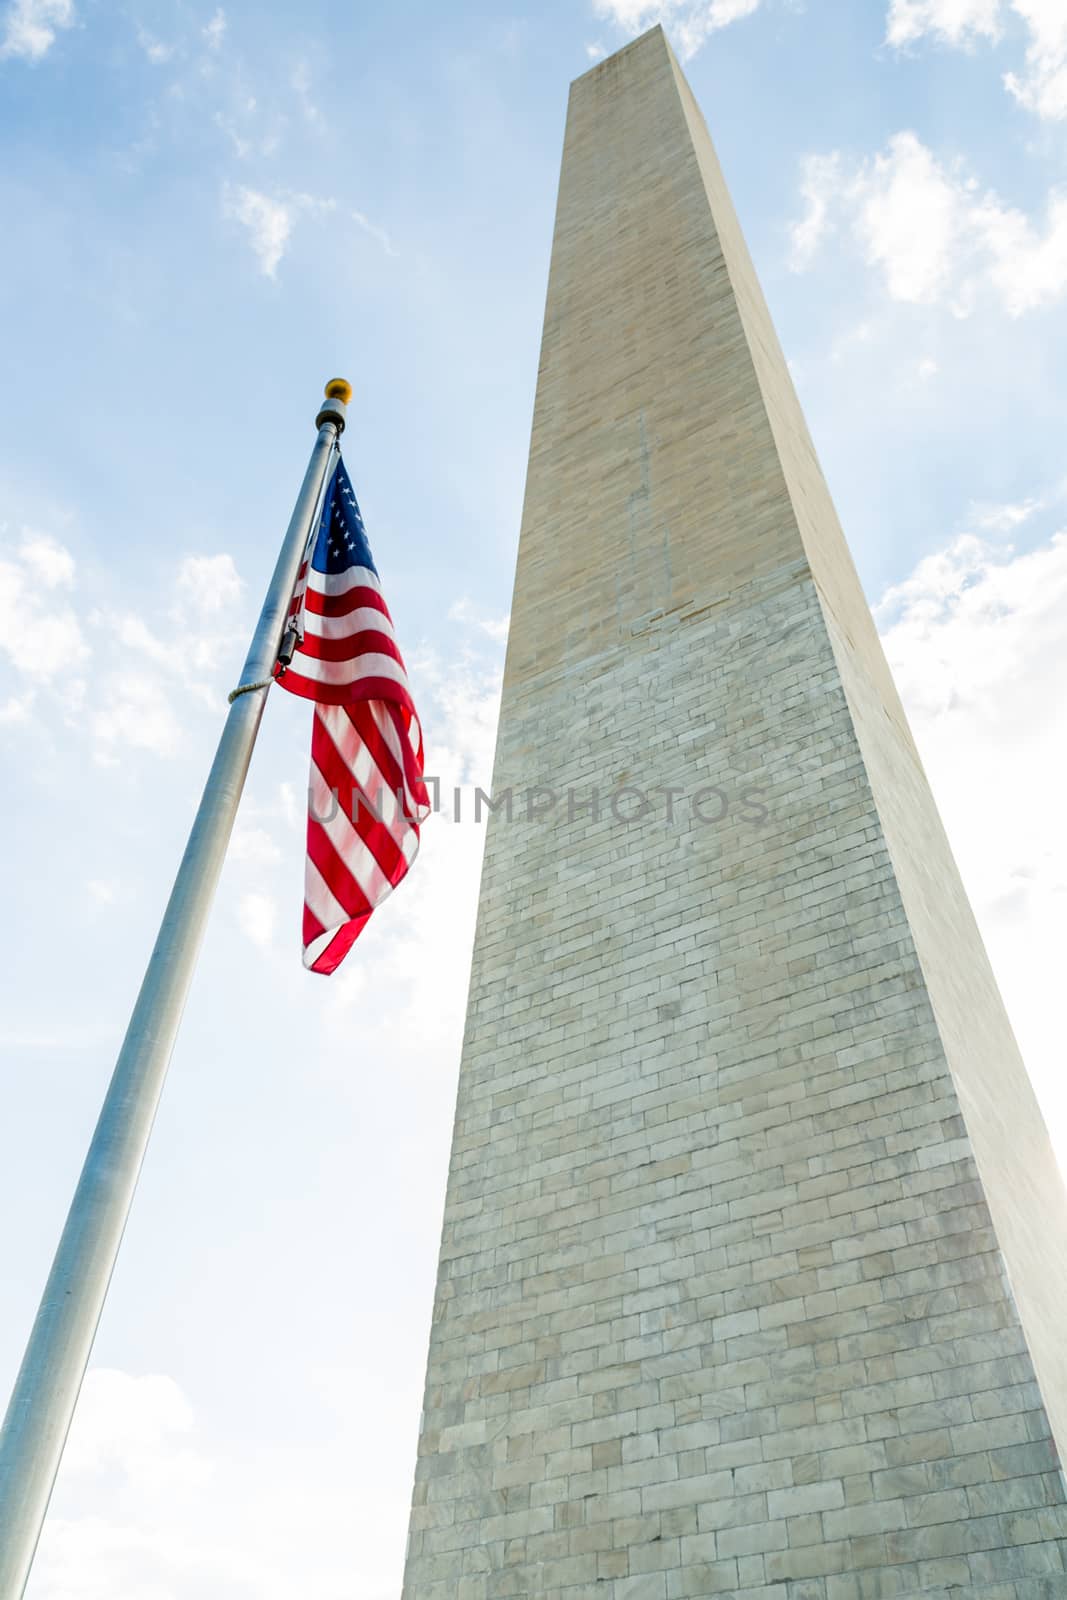 Washington Monument by derejeb